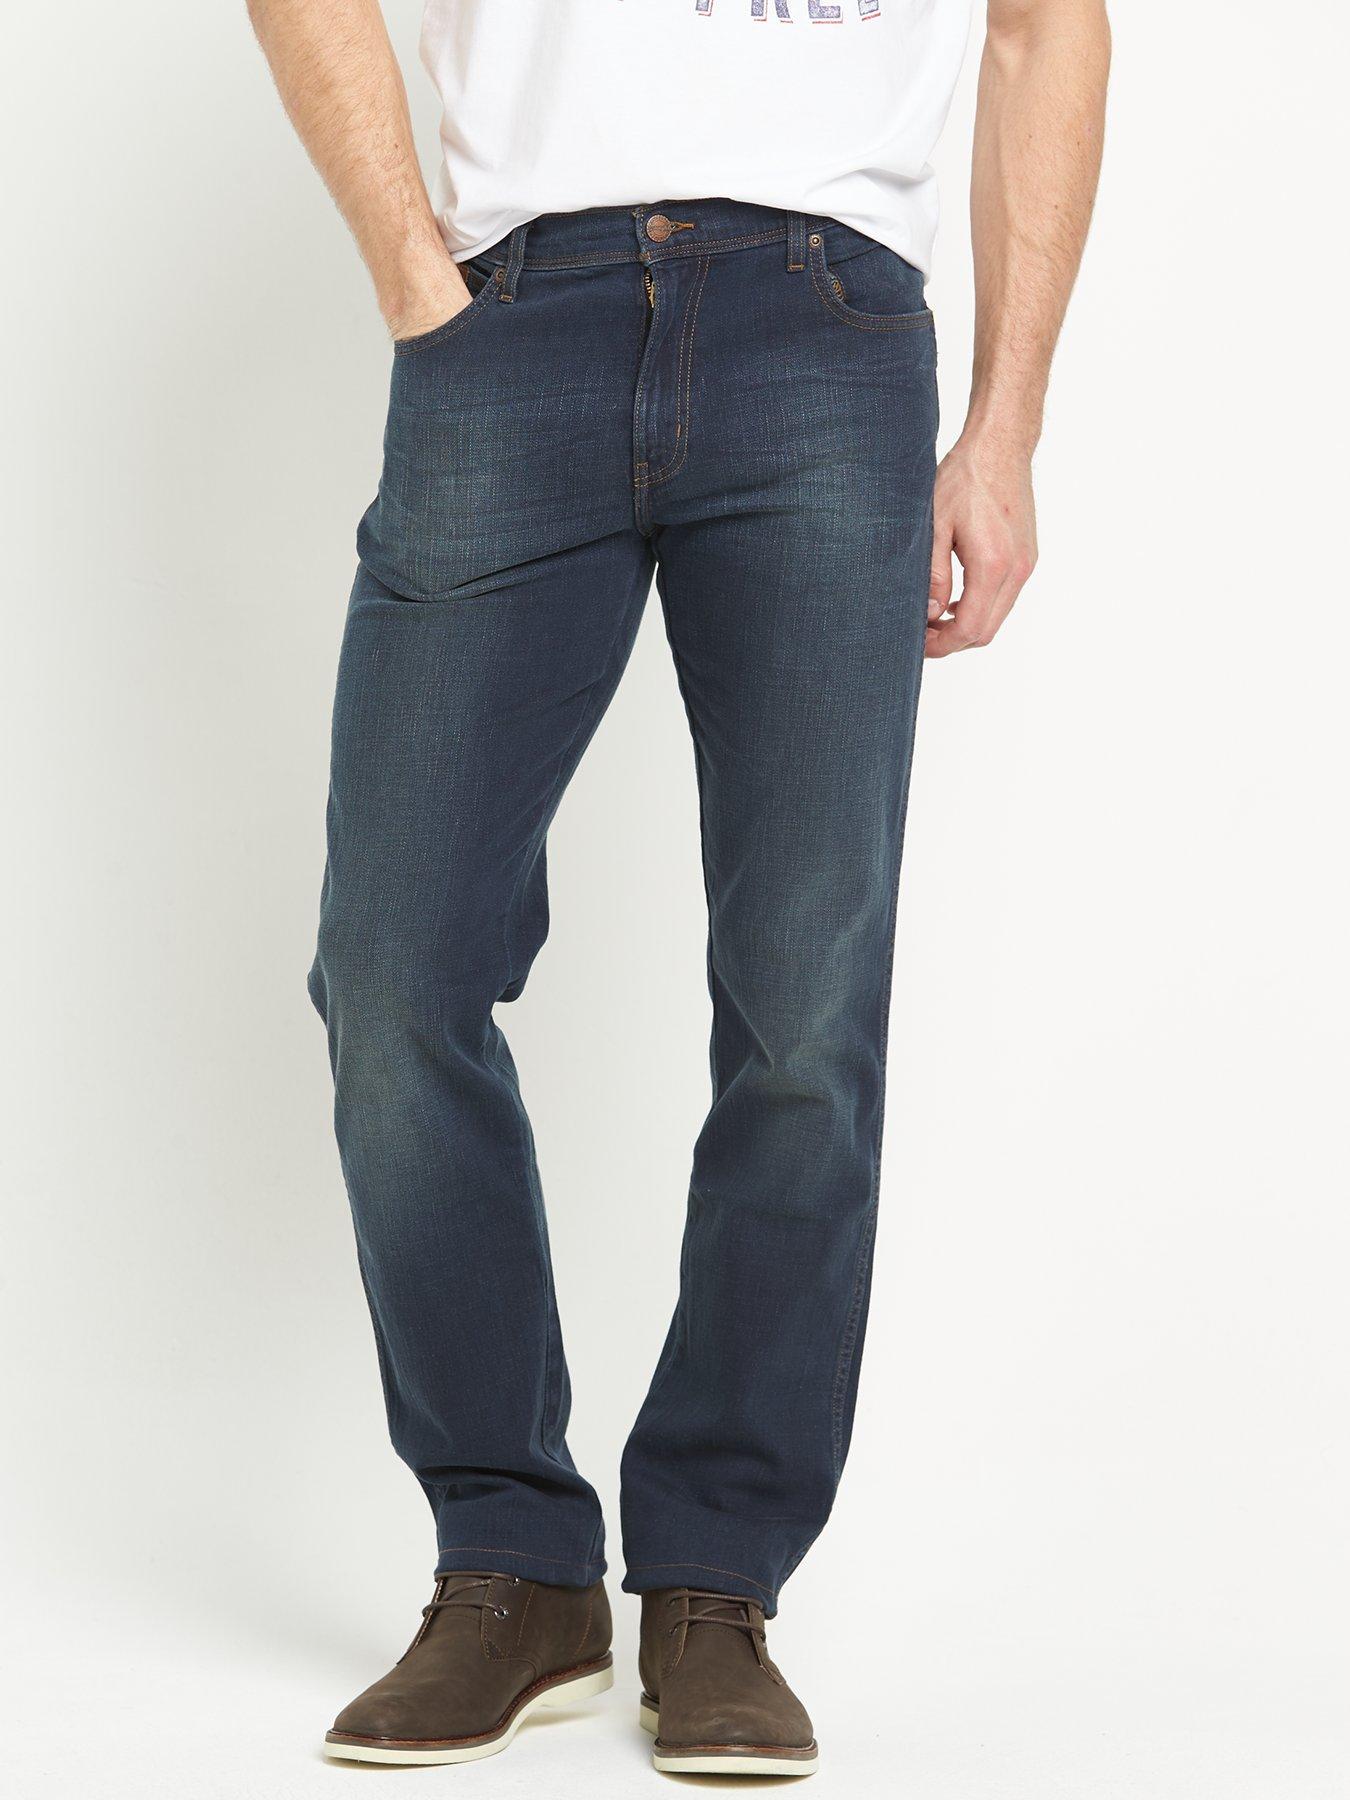 jeans wrangler stretch